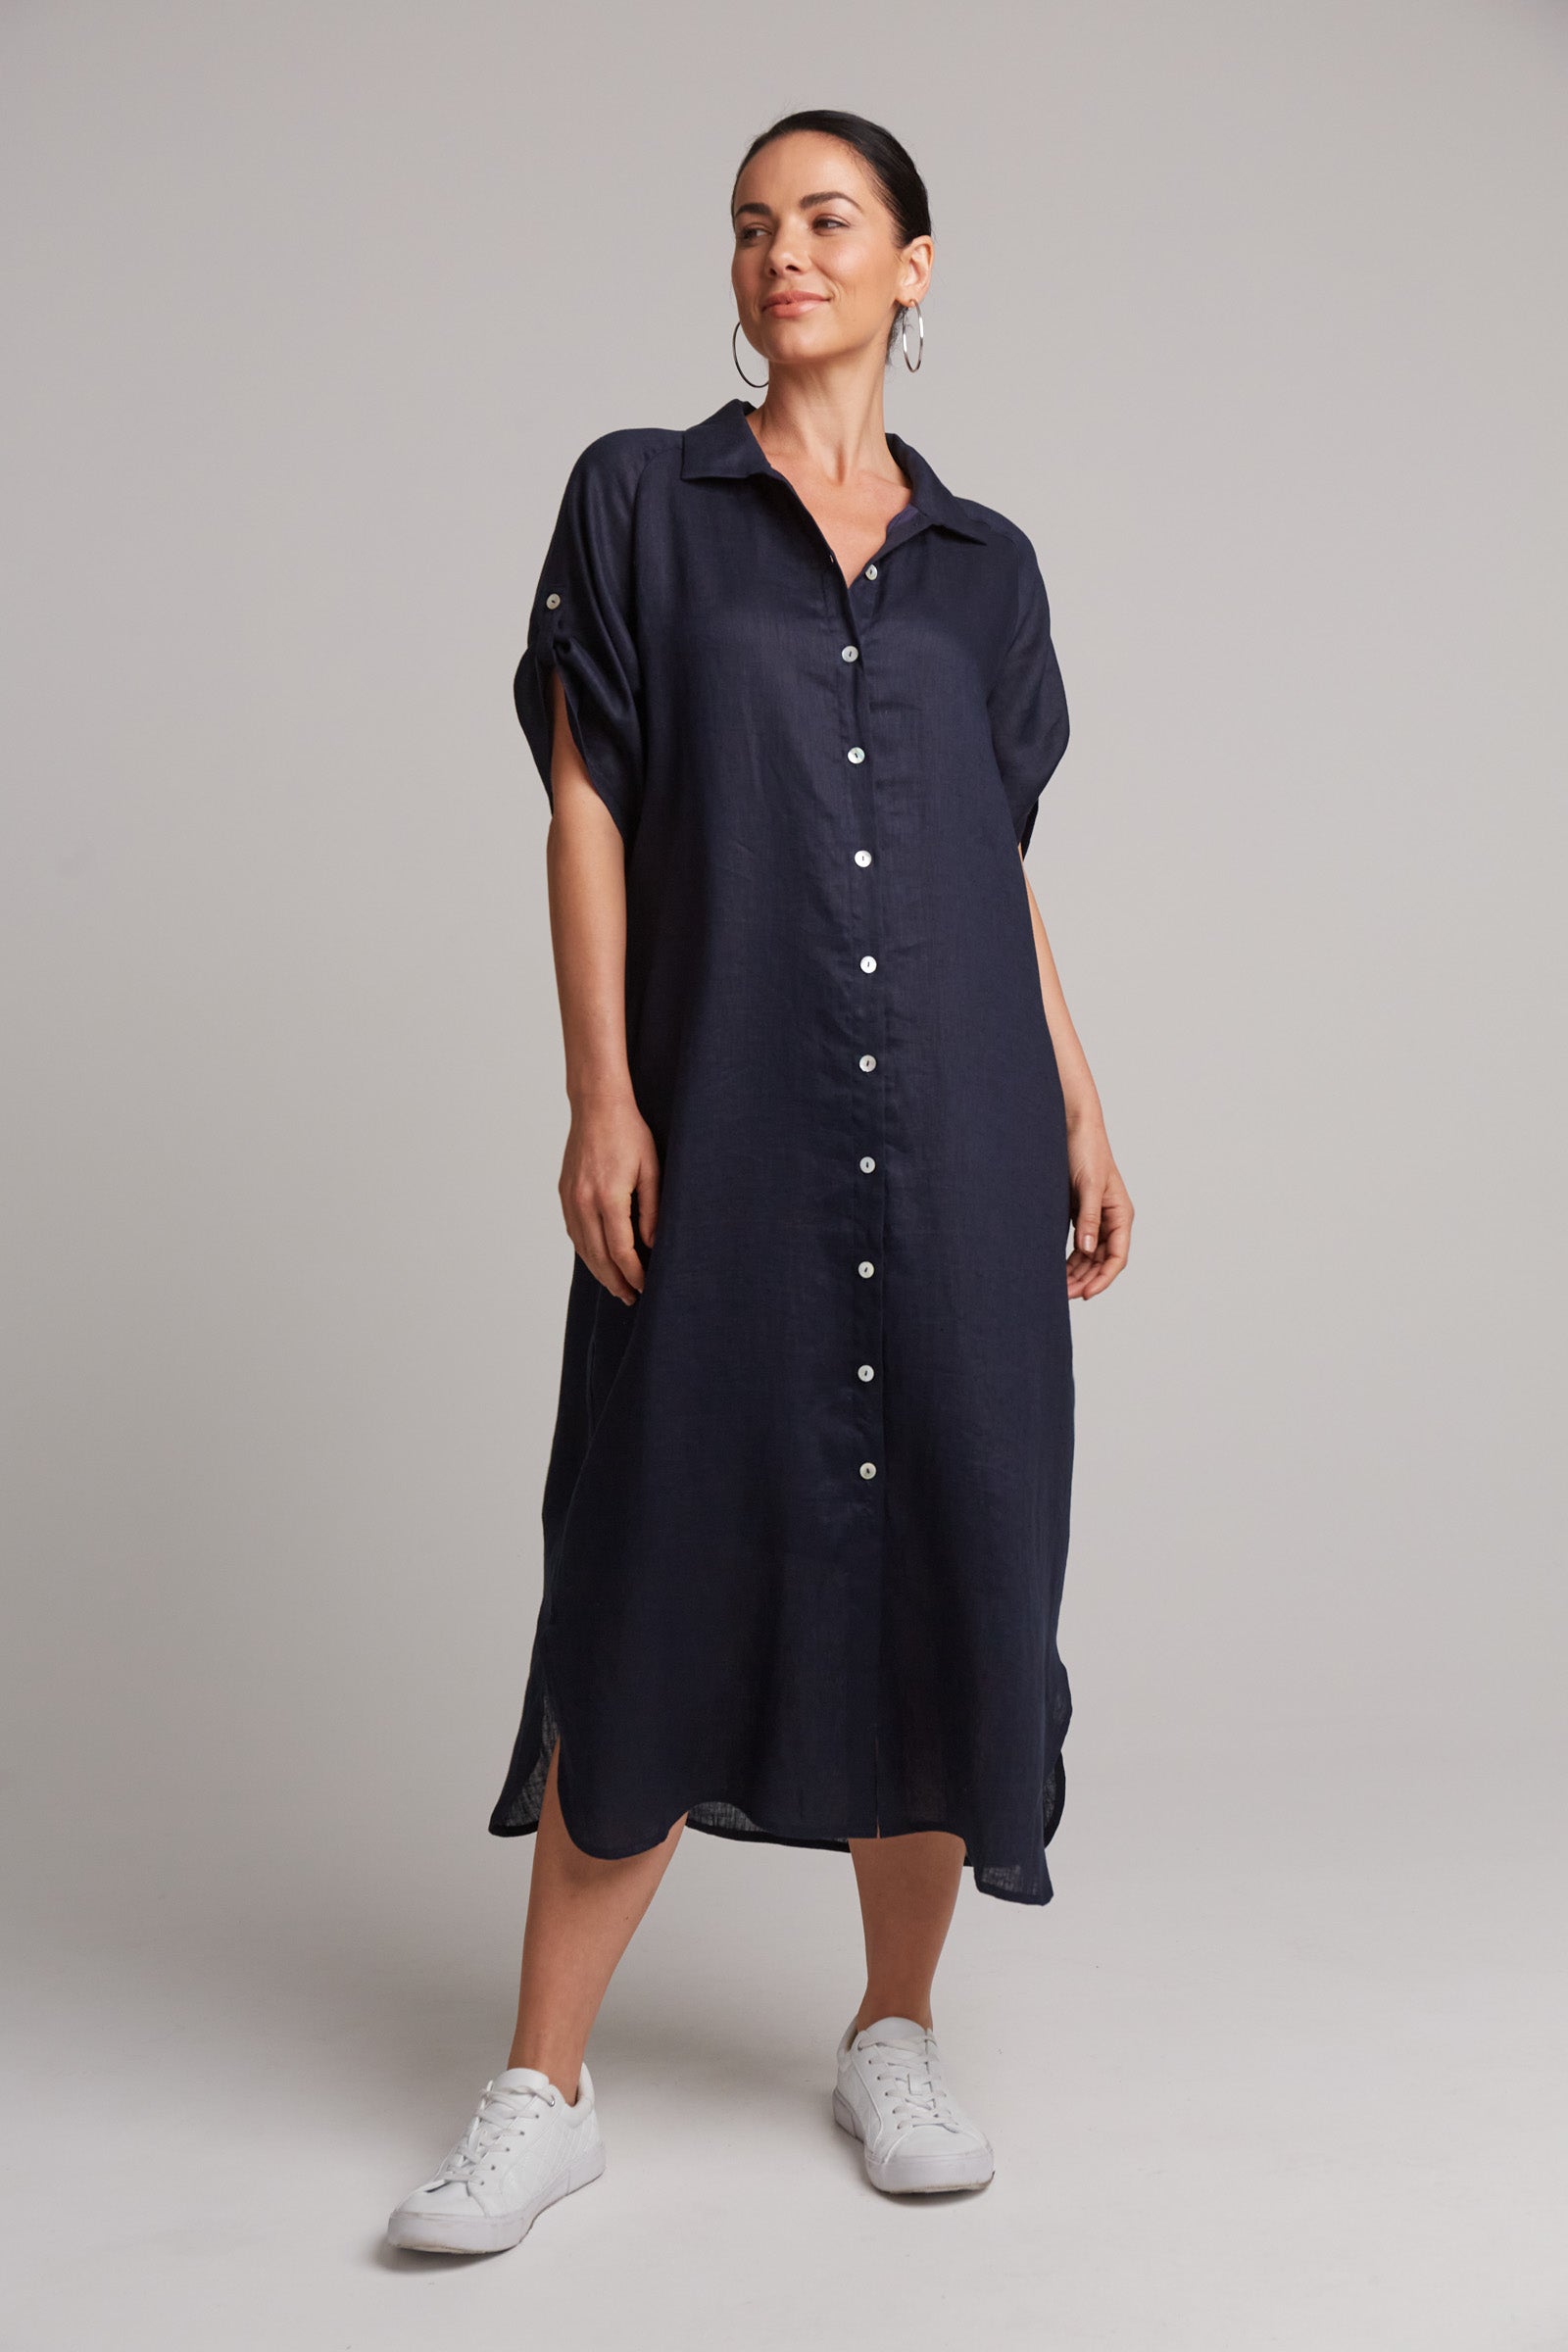 Studio Shirt Dress - Navy - eb&ive Clothing - Shirt Dress Mid Linen